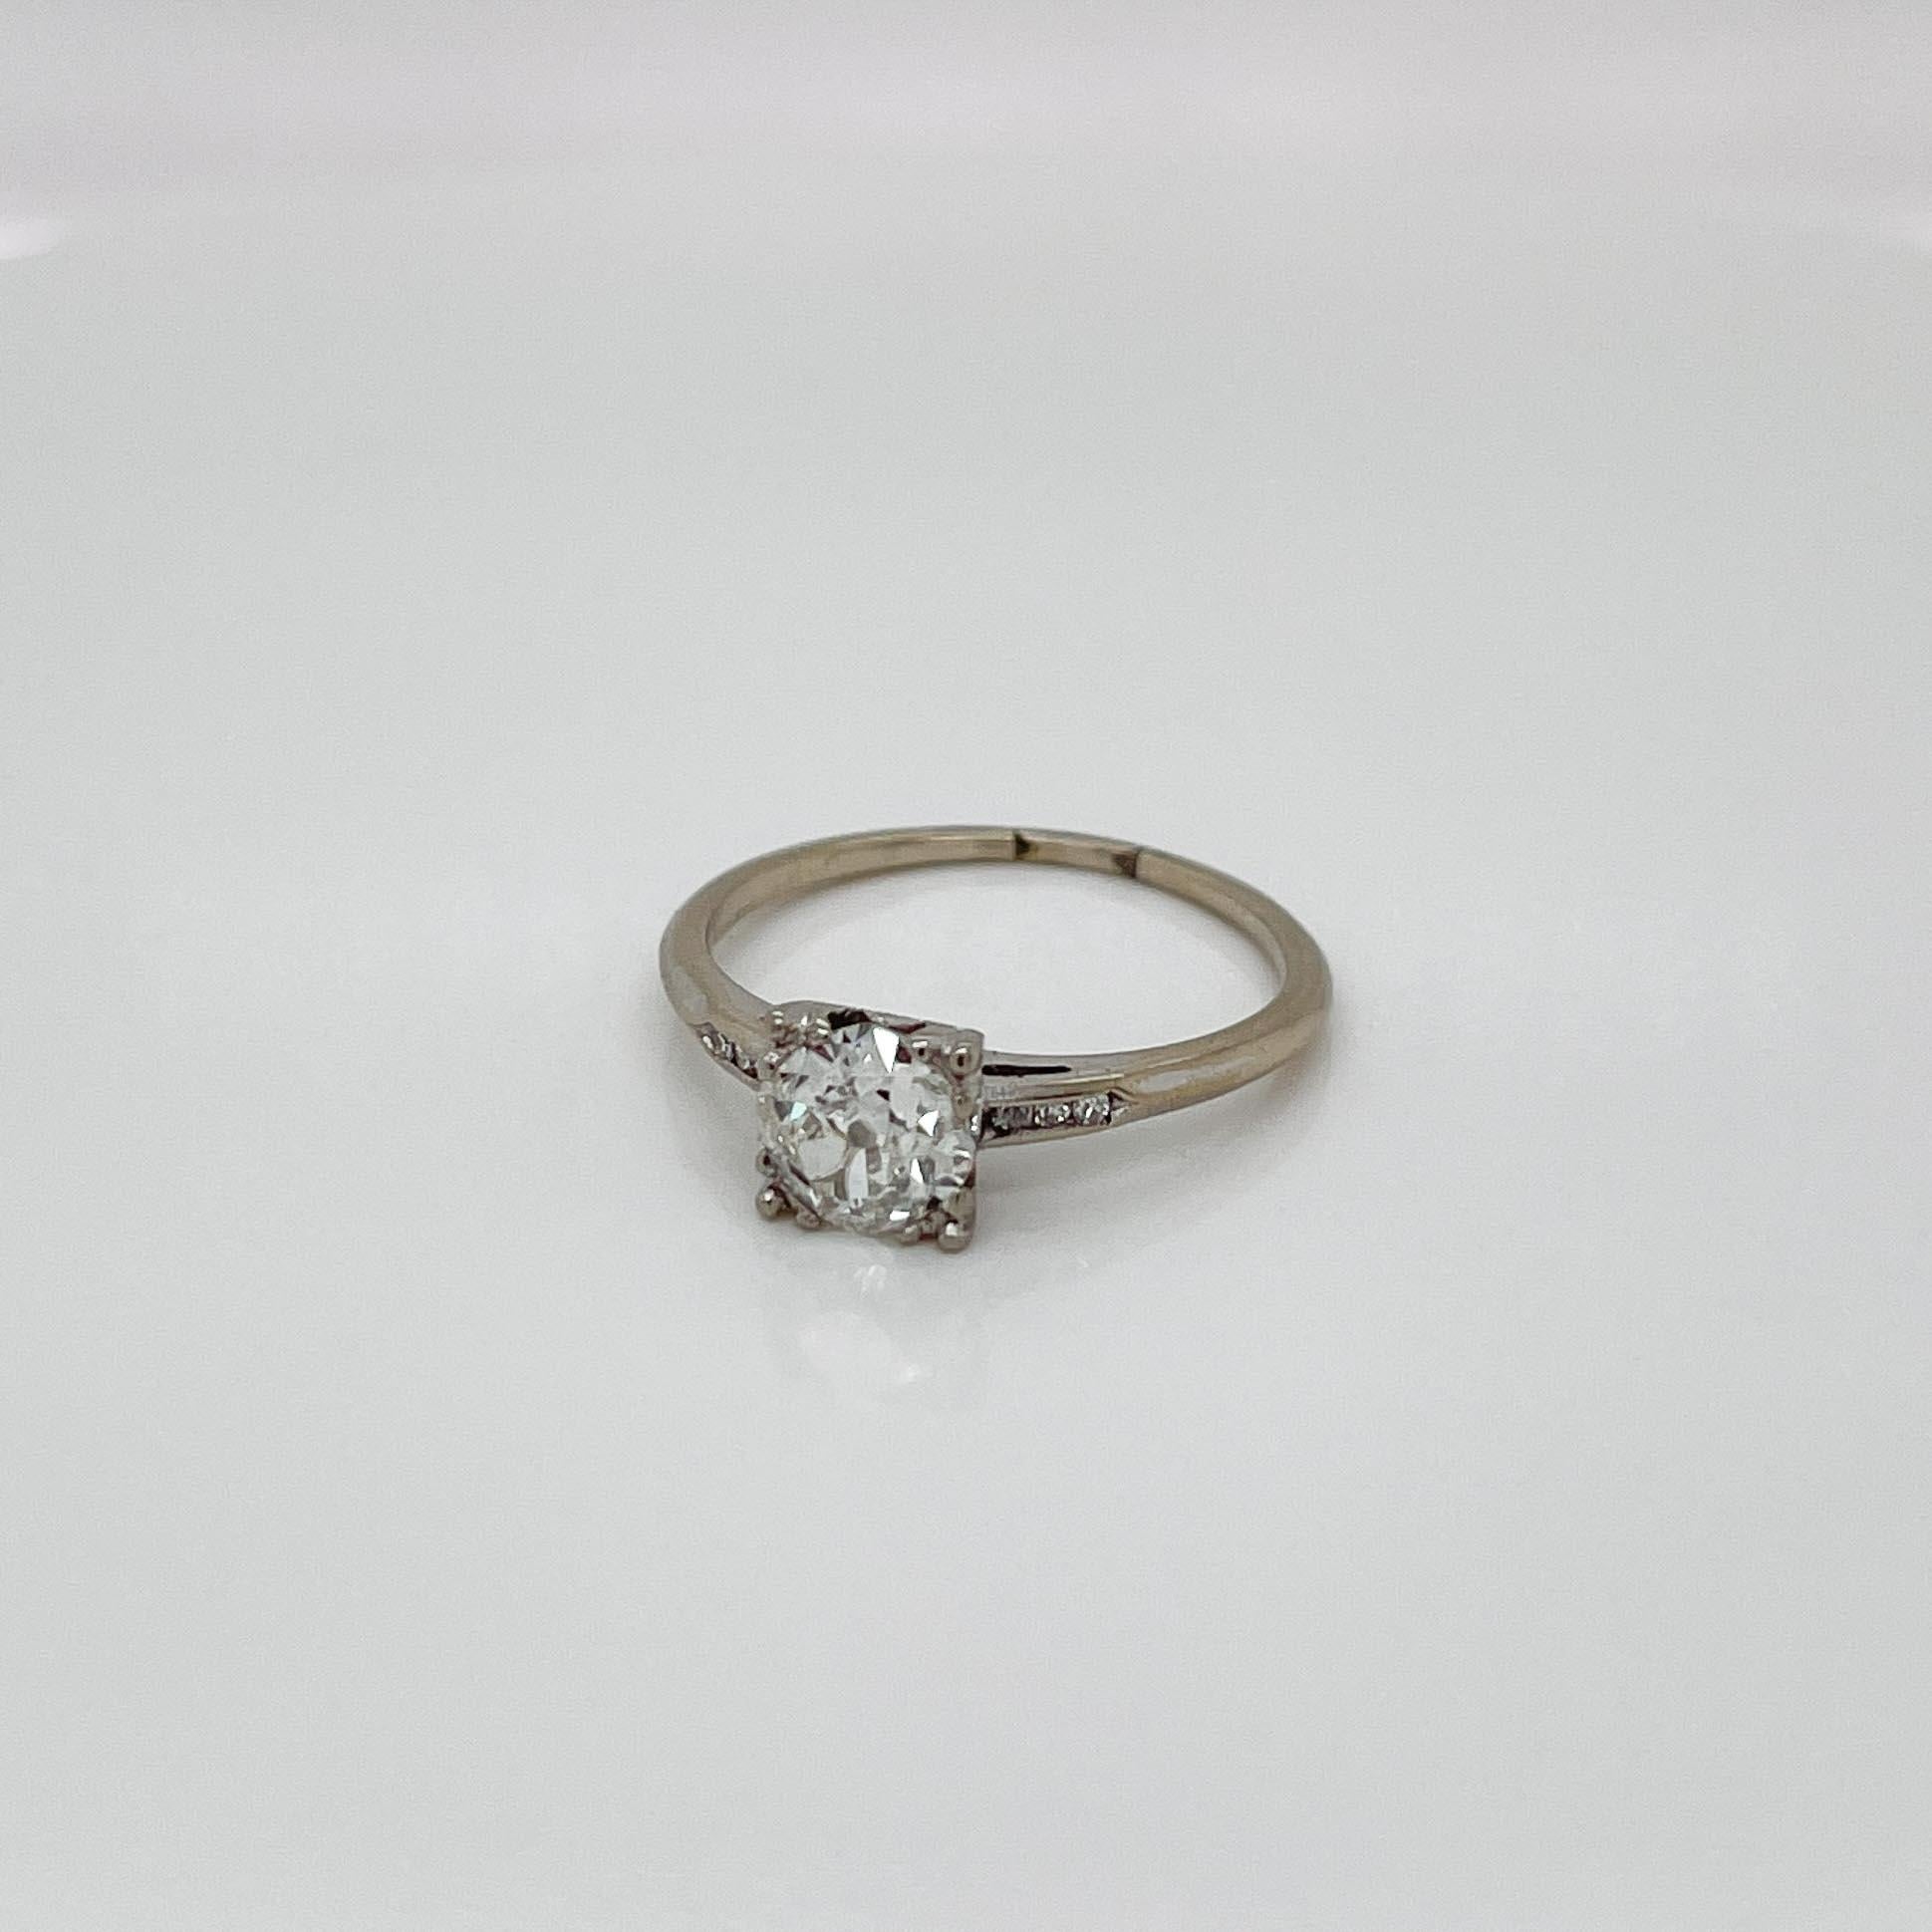 Vintage 14k White Gold & Old Mine Cut Diamond Engagement Ring For Sale 6